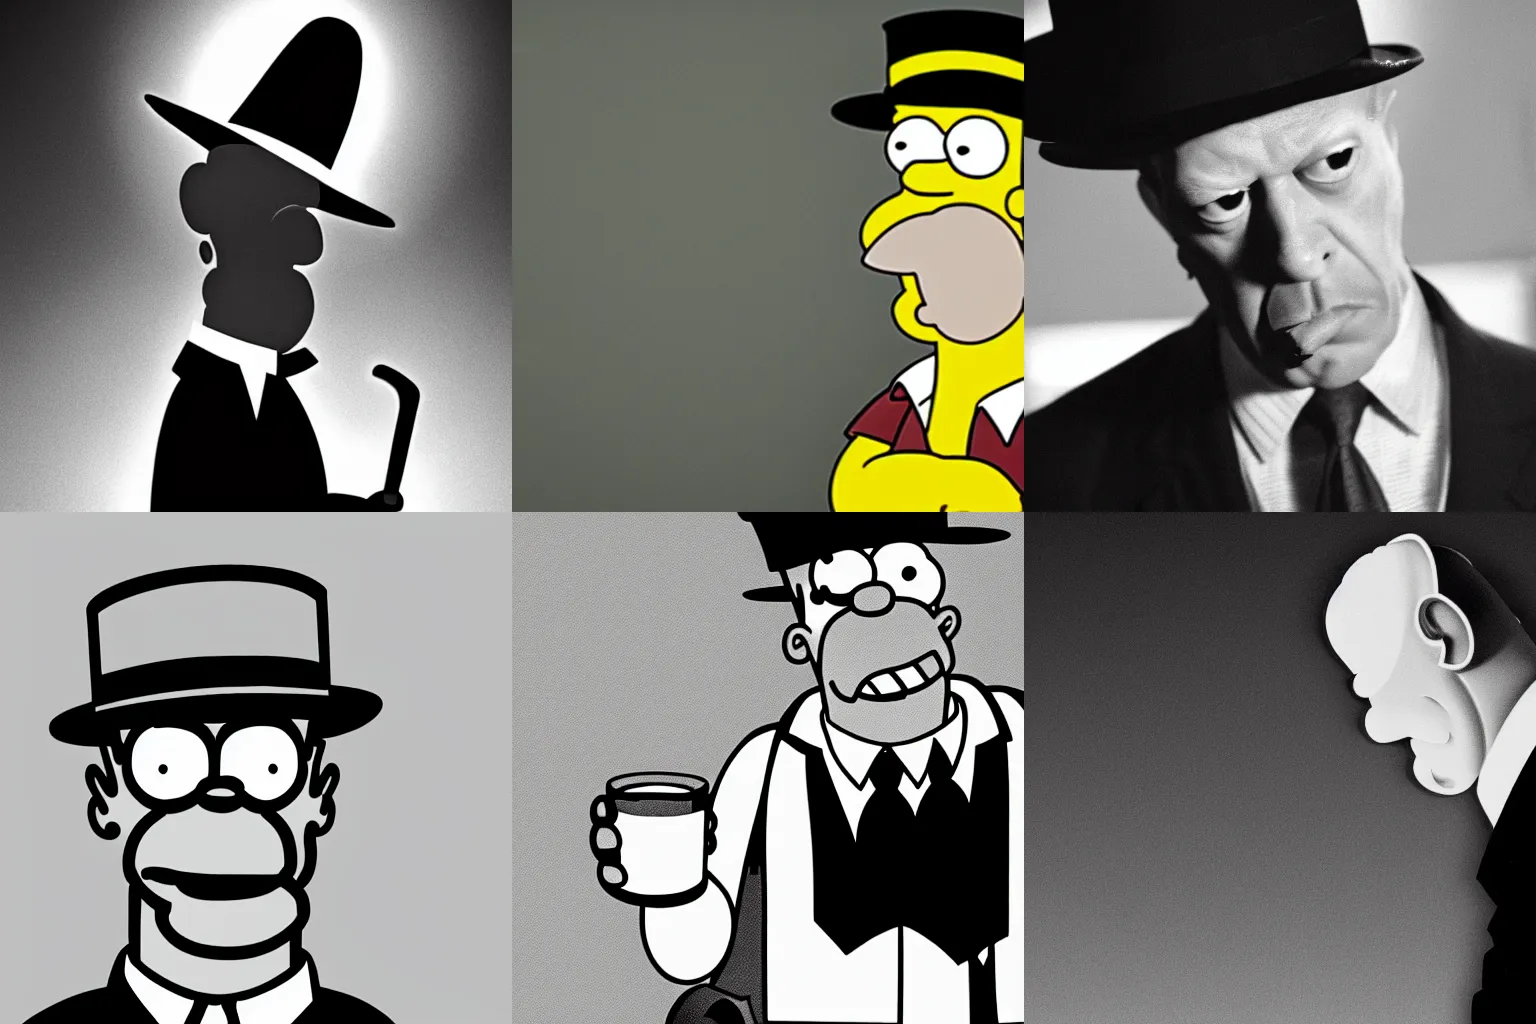 Prompt: homer simpson in a noir film, fedora, cigarette smoke, dark shadows, full resolution